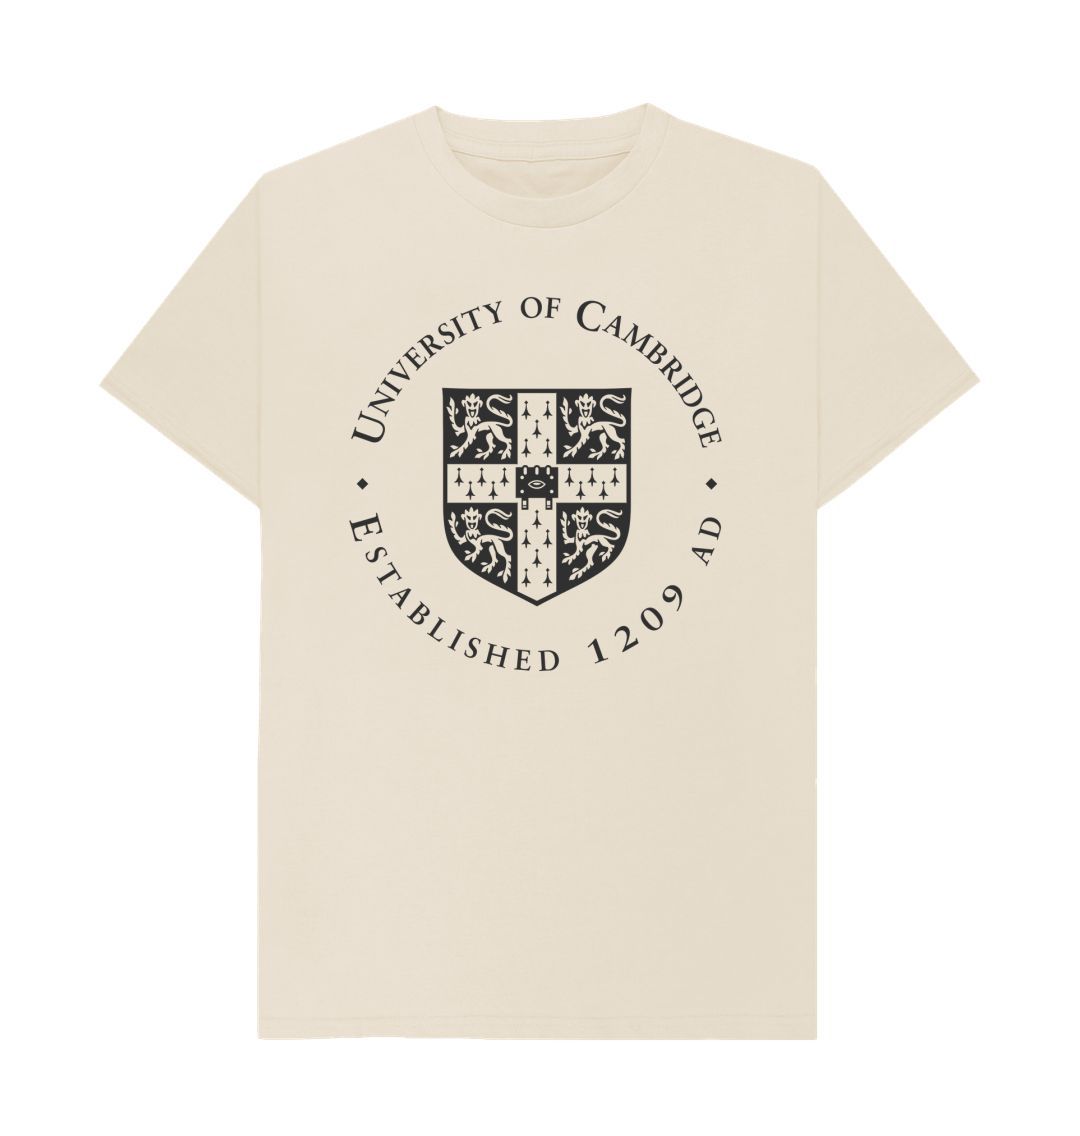 Oat Men's University of Cambridge Crew Neck Tee